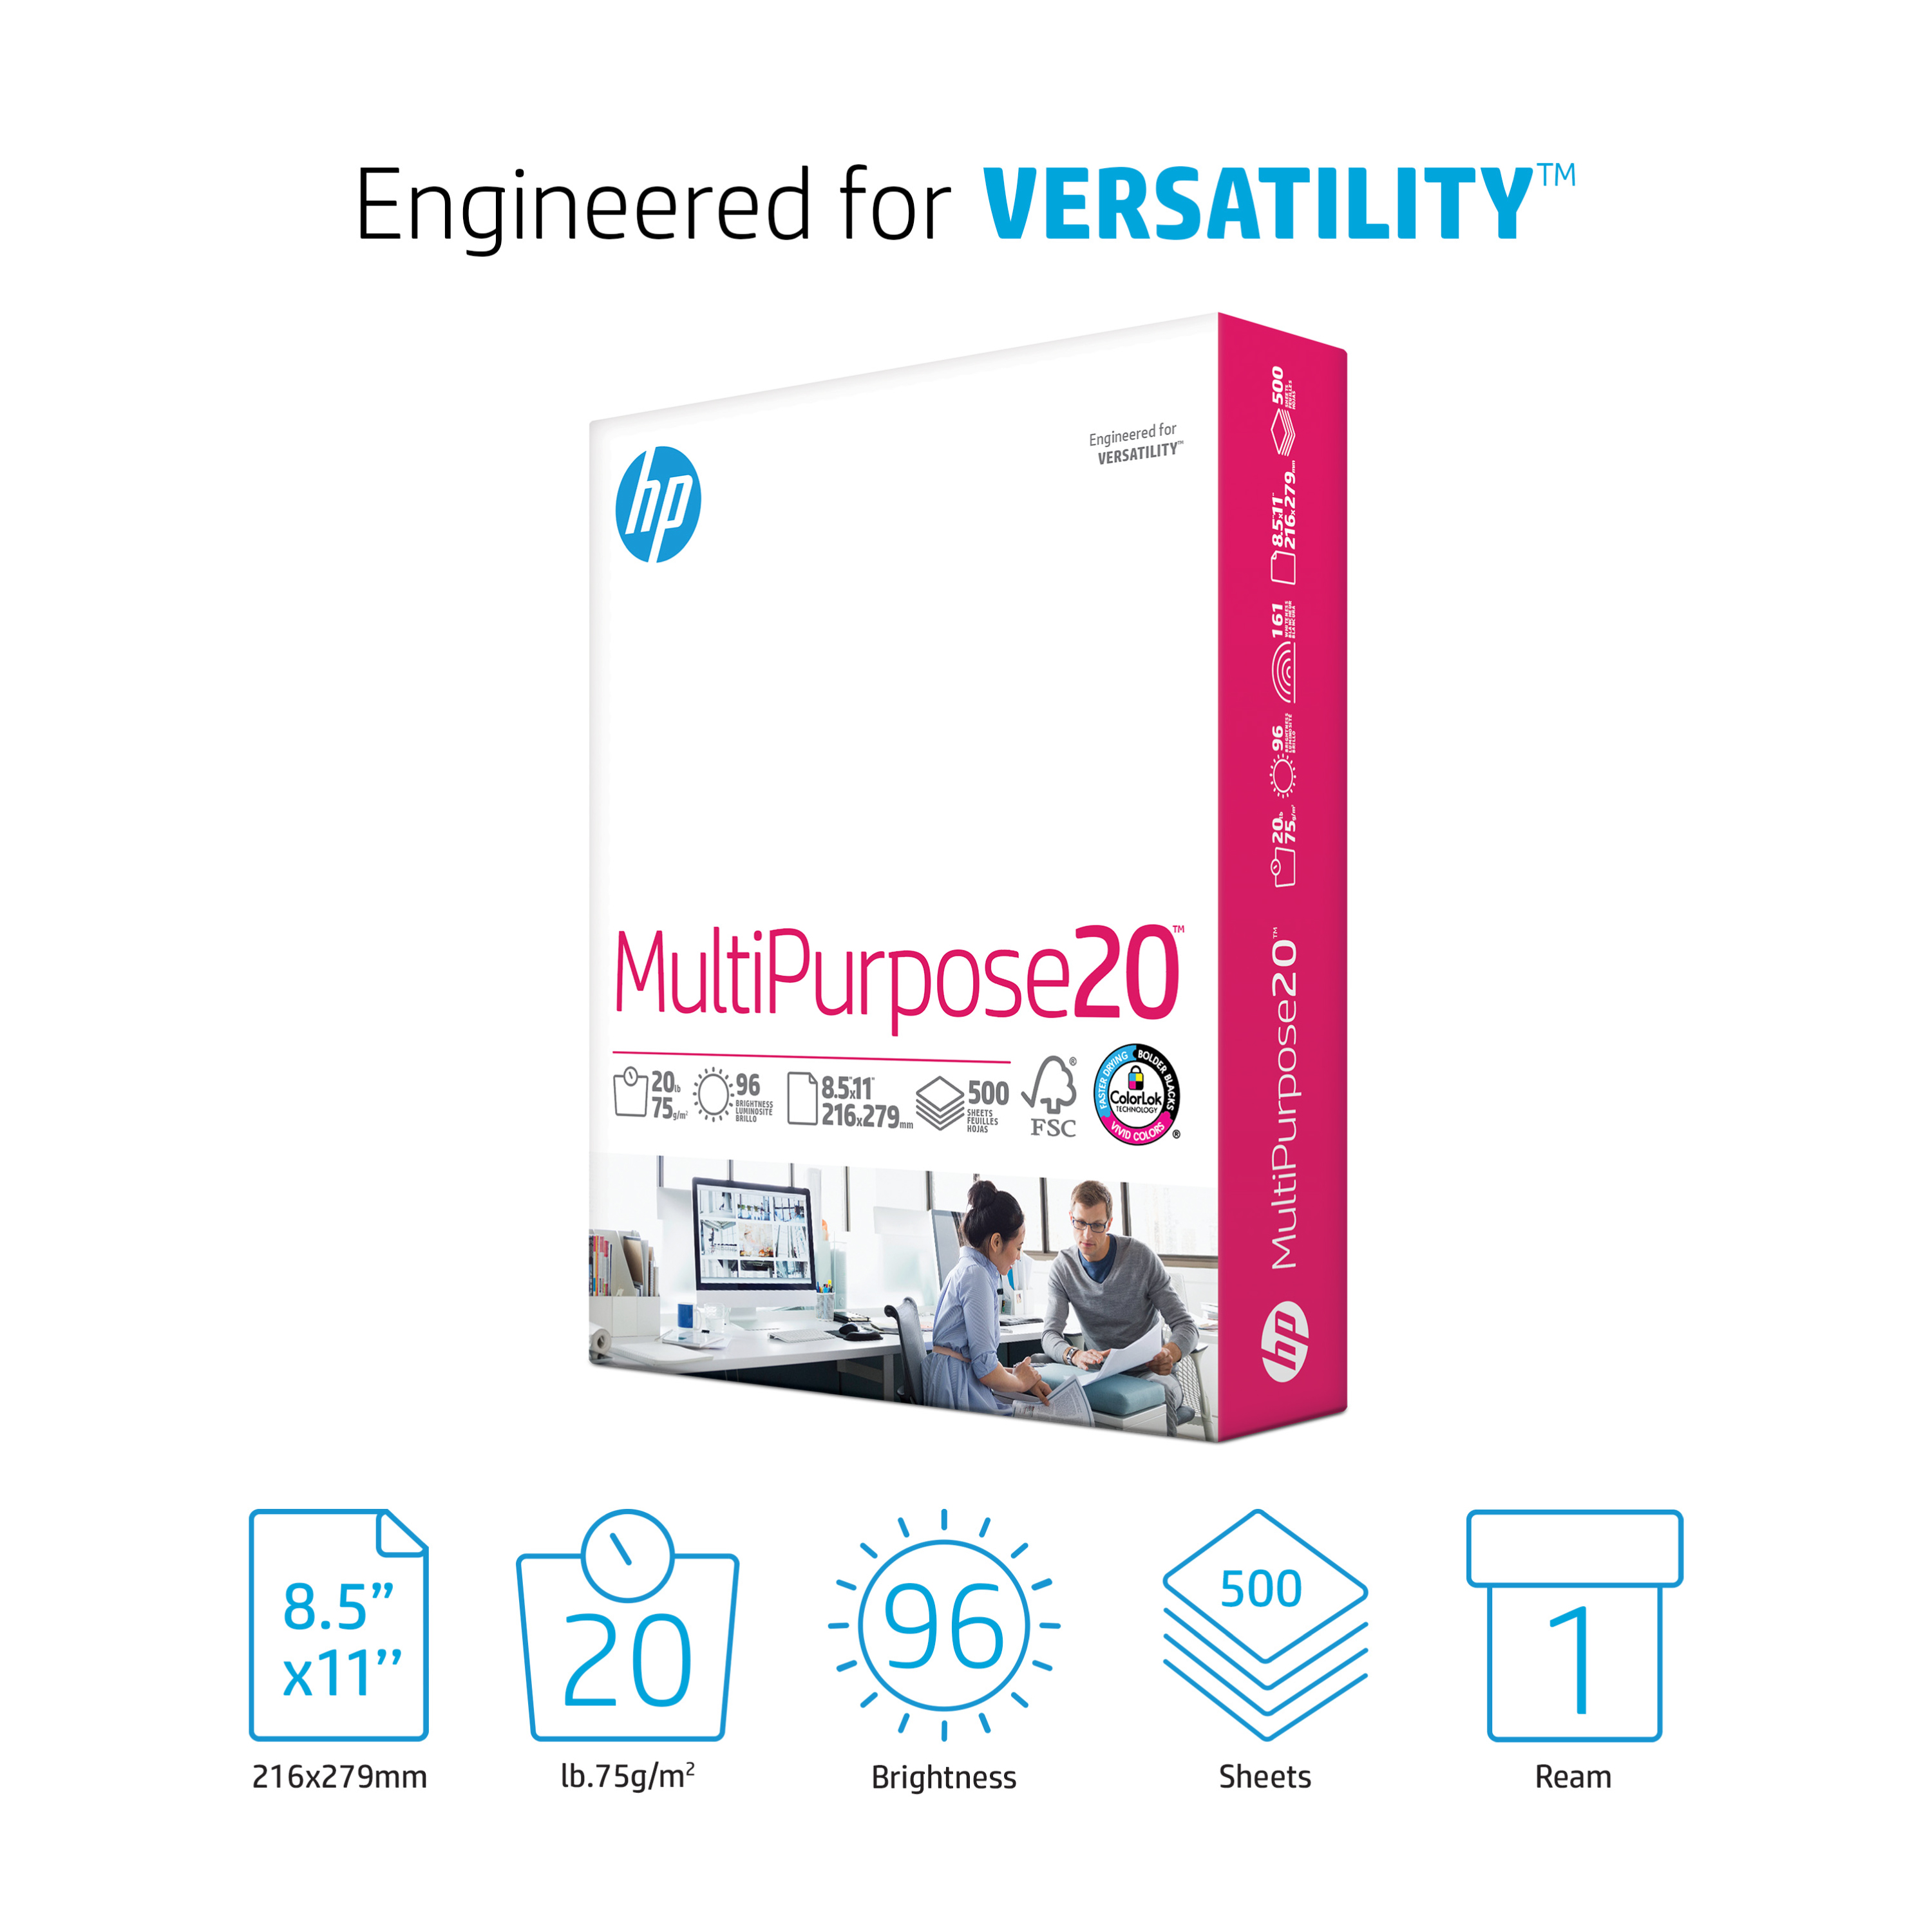 HP Multipurpose20, 20lb, 8.5 x 11, 500 Sheets - image 3 of 9